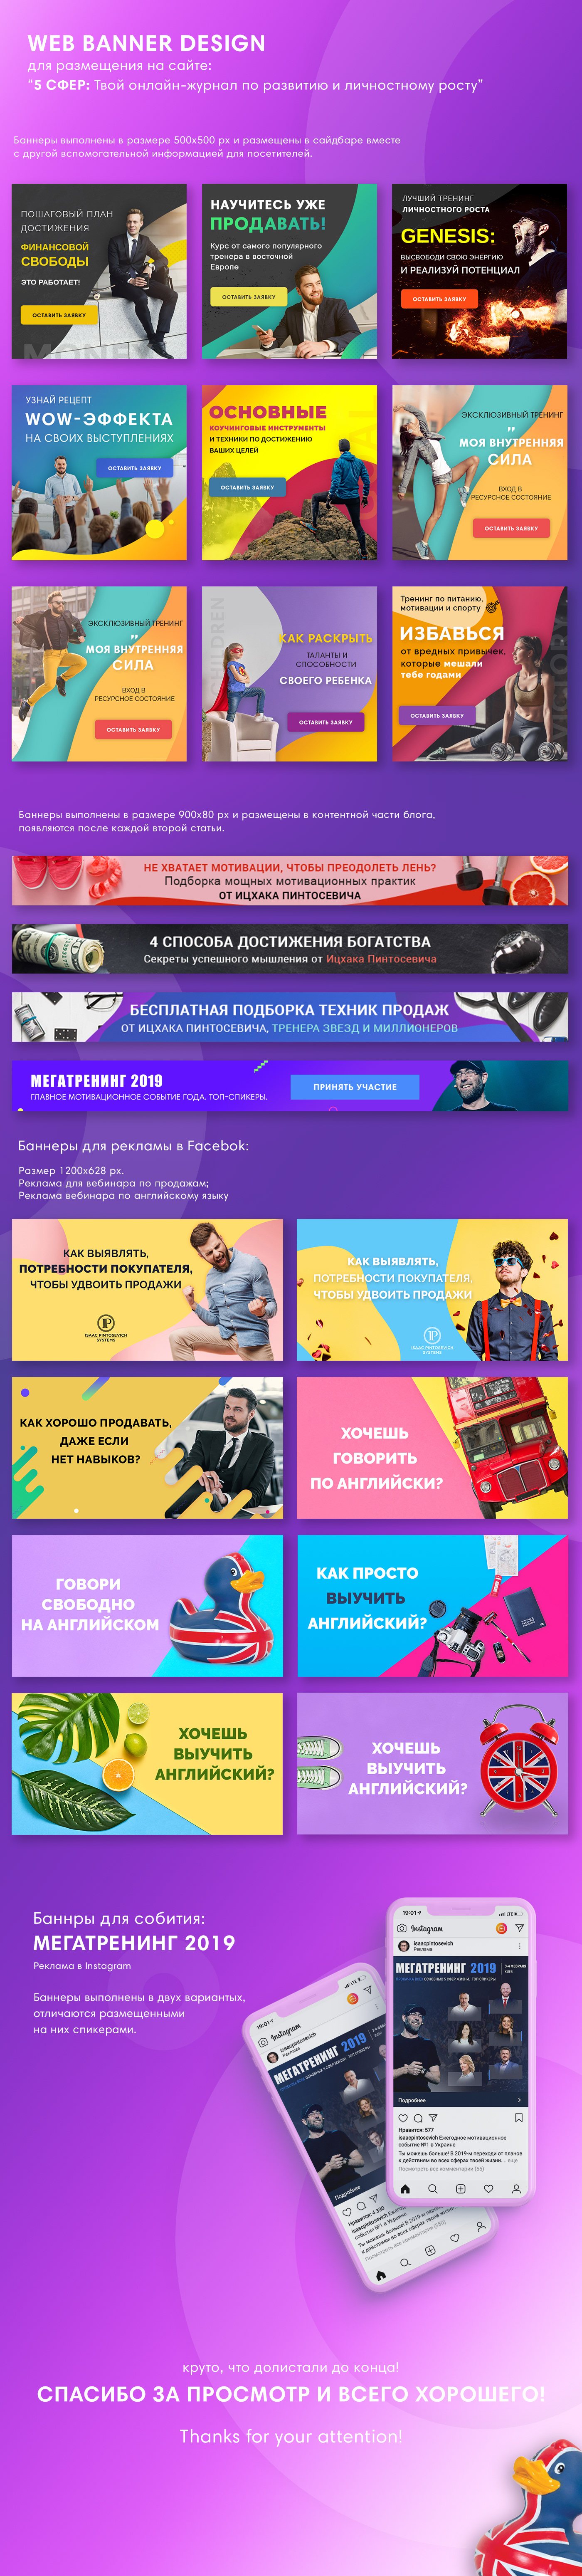 Web Banner pintosevich Blog Web ads